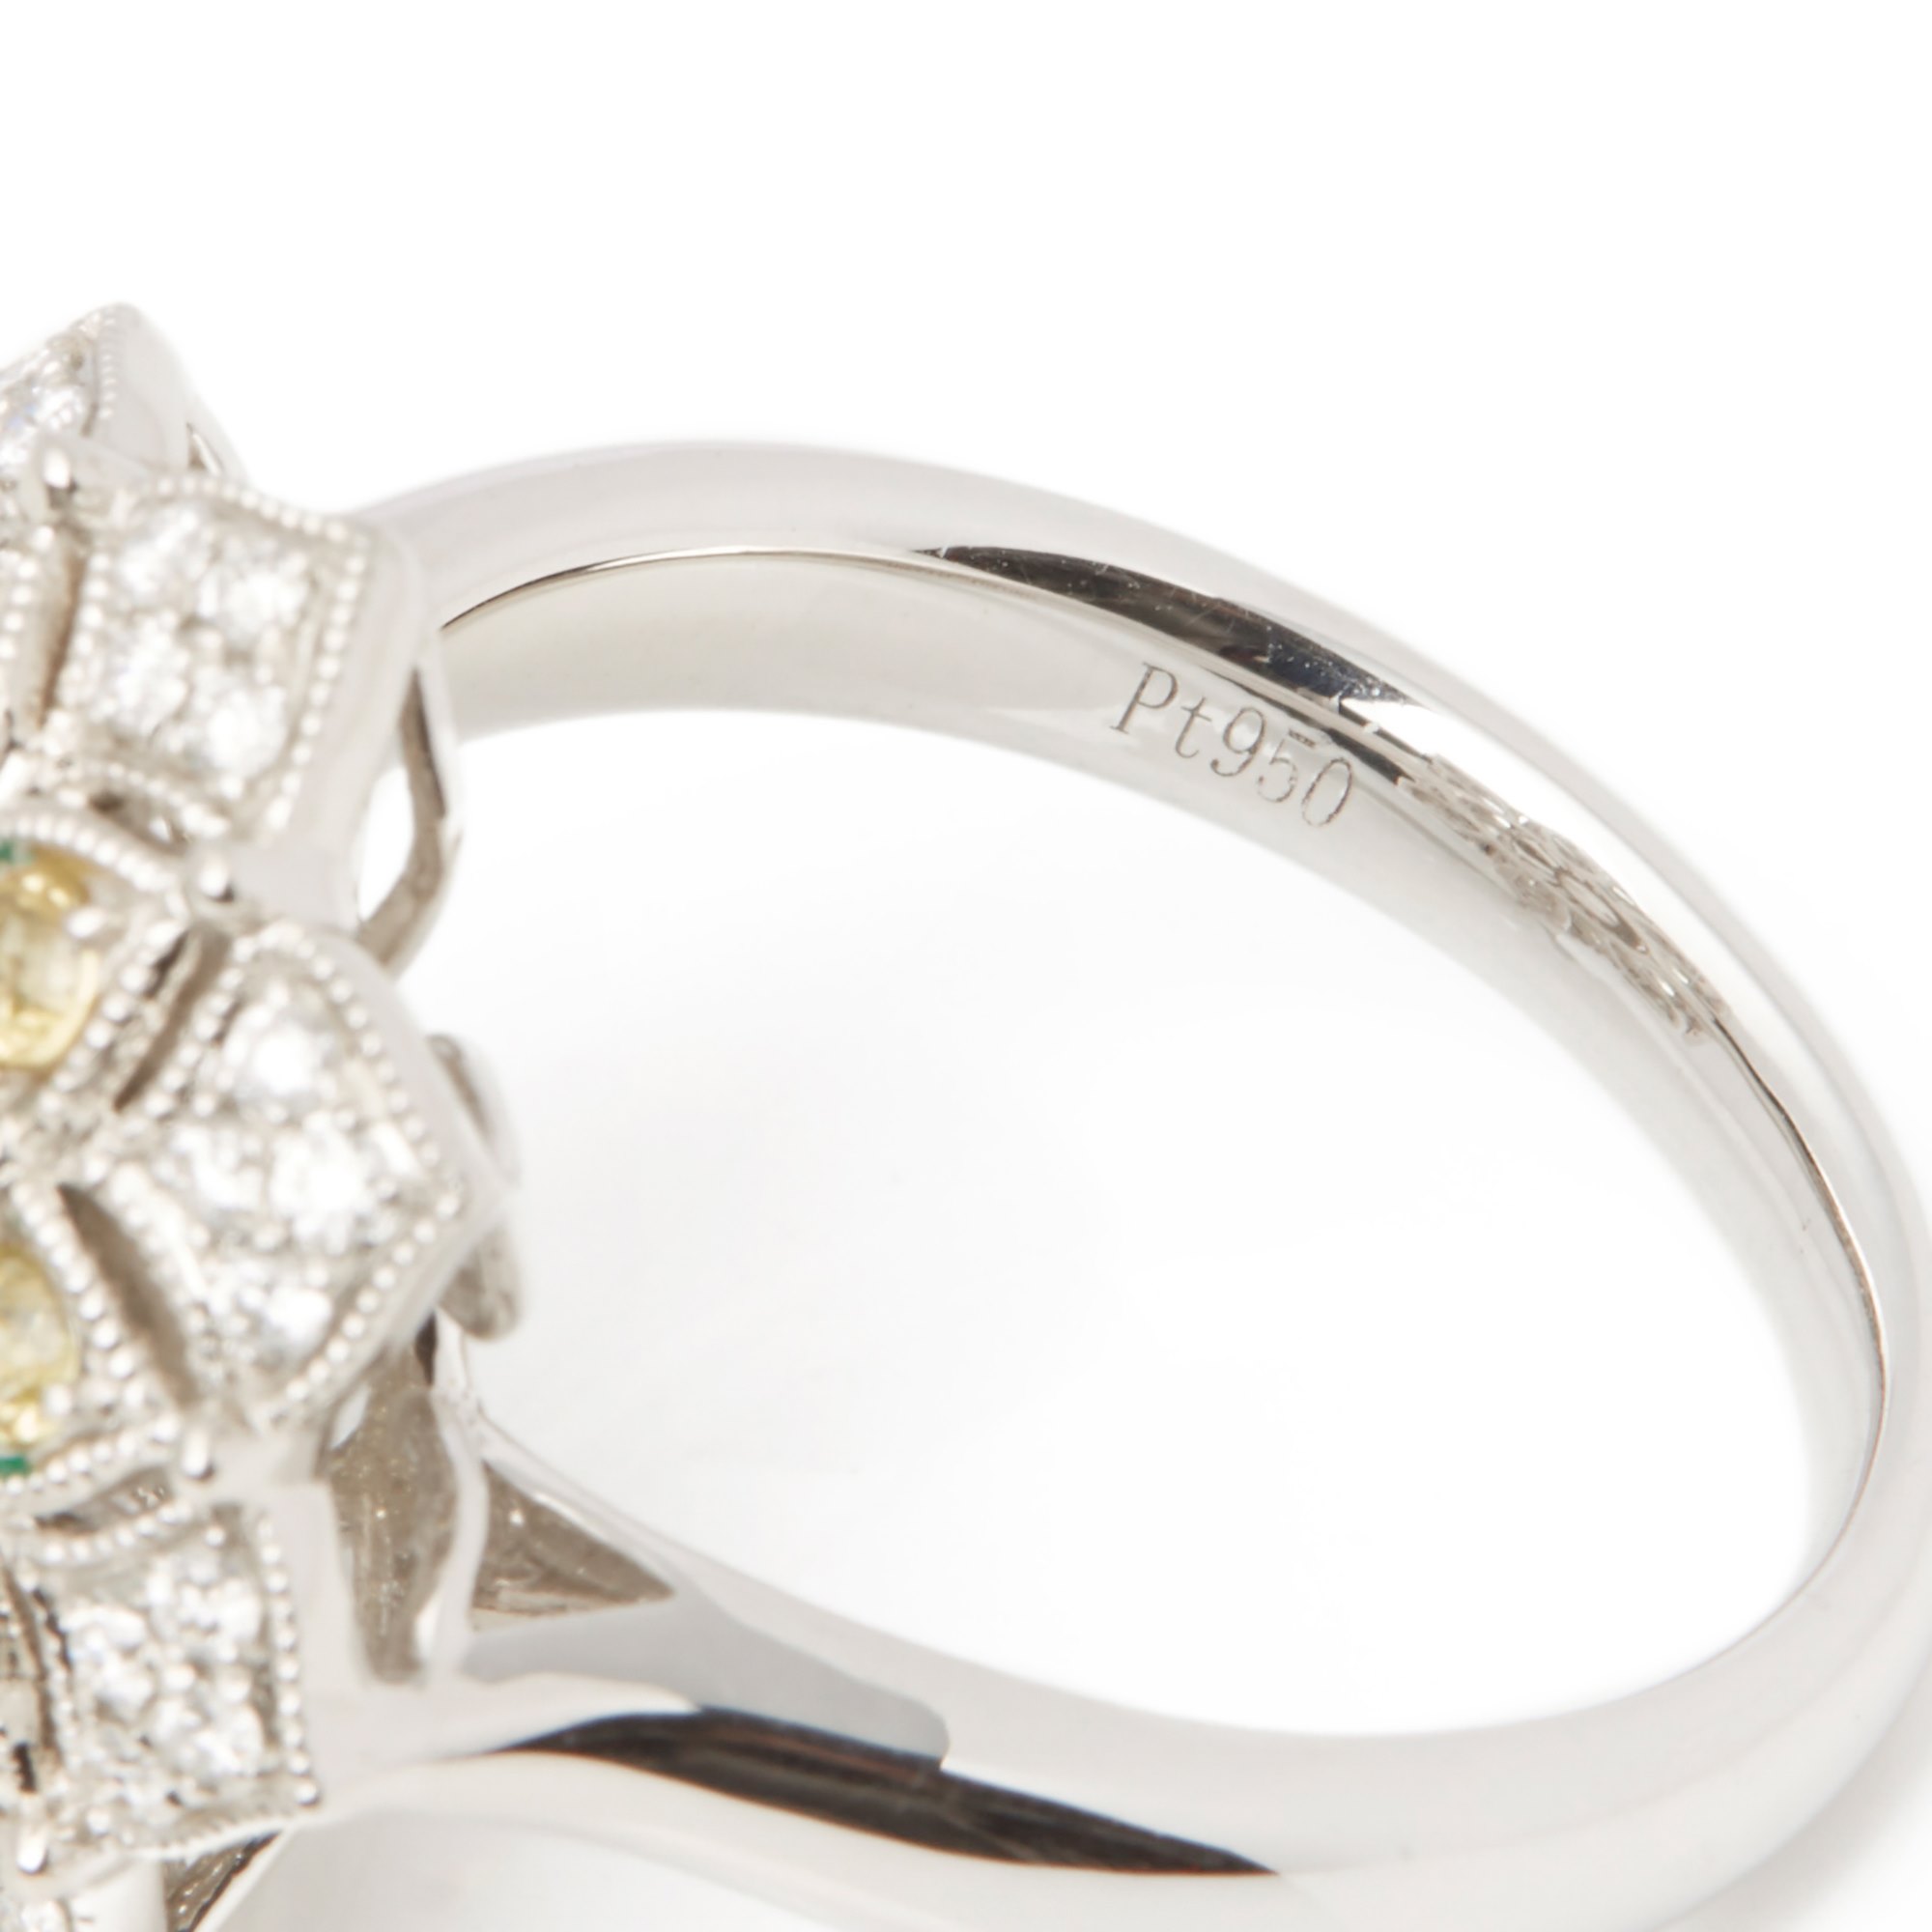 David Jerome Platinum Emerald, Diamond and yellow Sapphire Cluster Ring